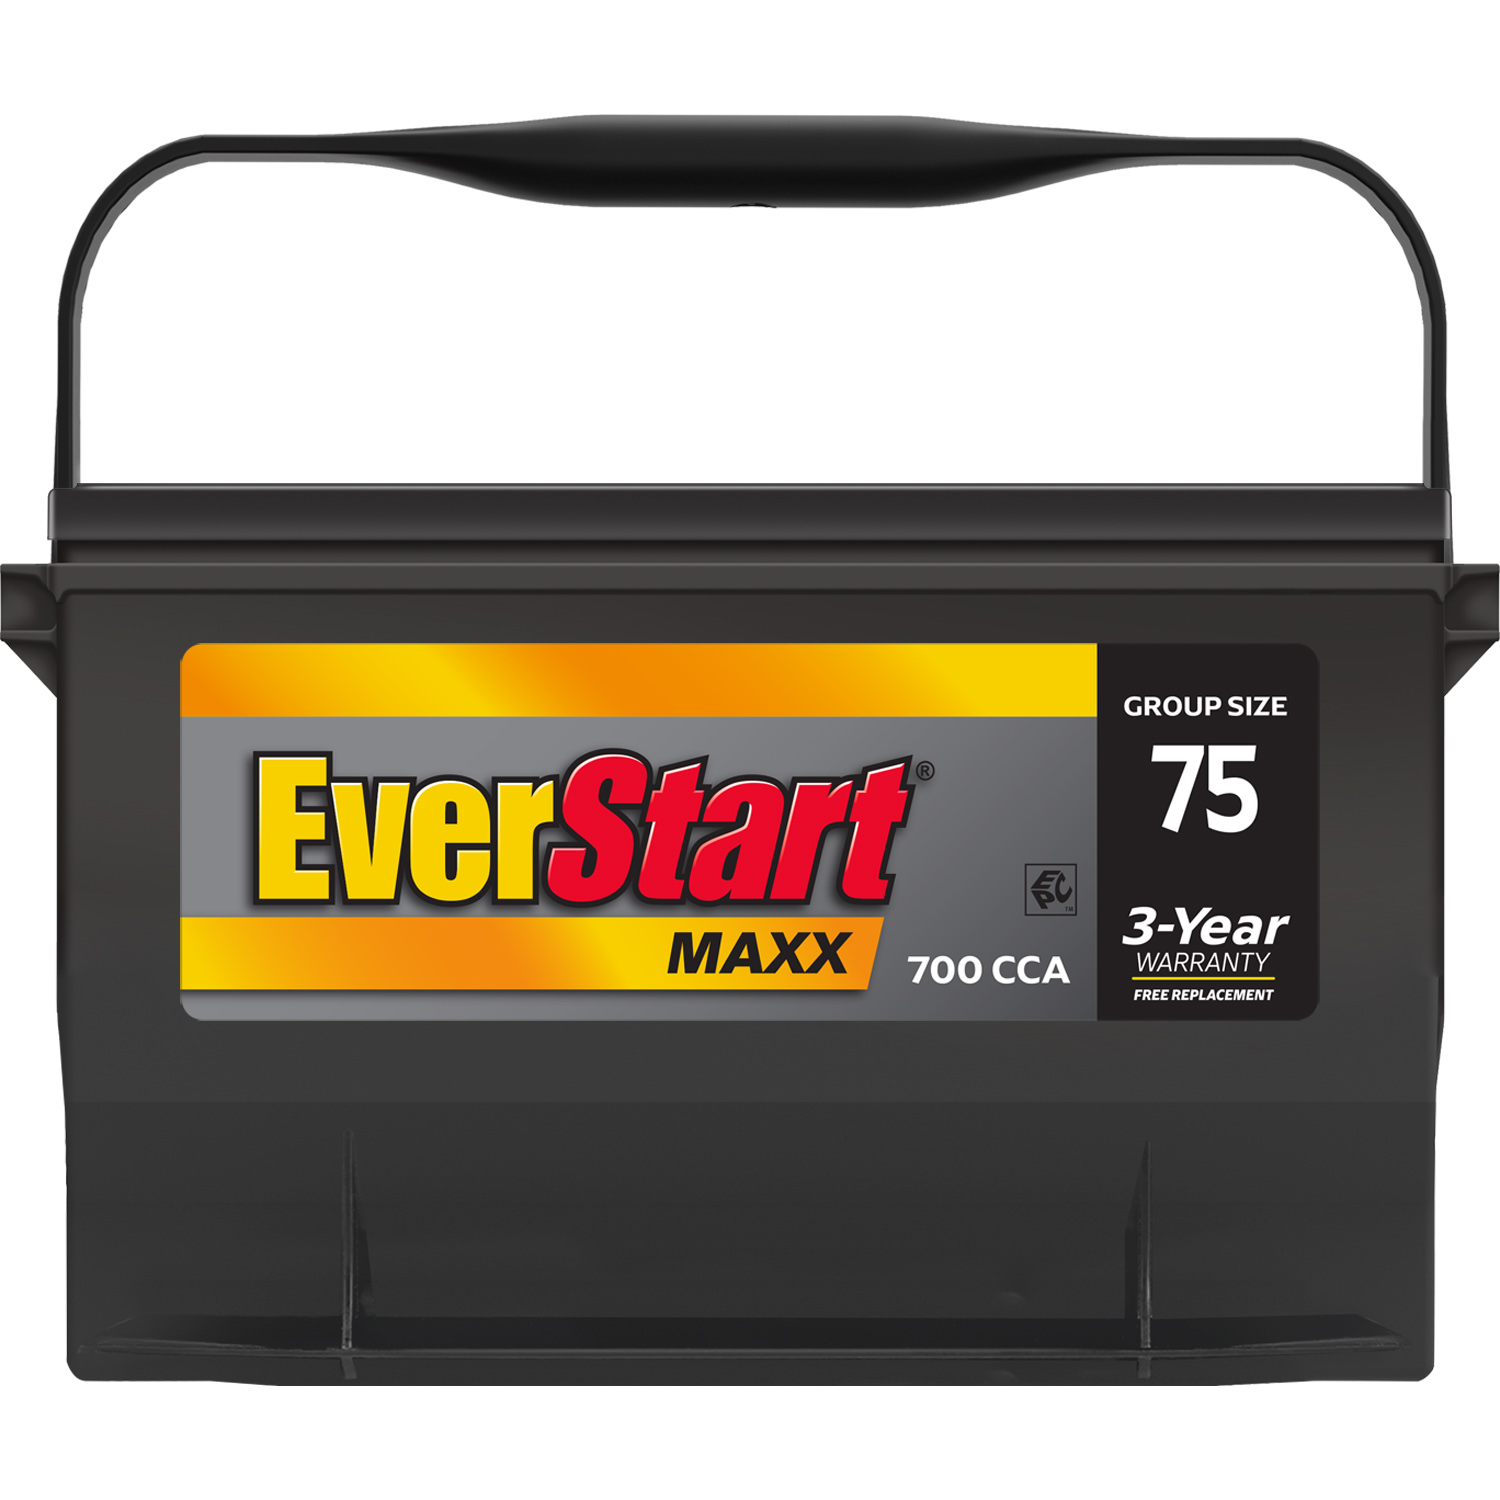 EverStart Maxx Lead Acid Automotive Battery, Group 75 12 Volt, 700 CCA - image 3 of 7